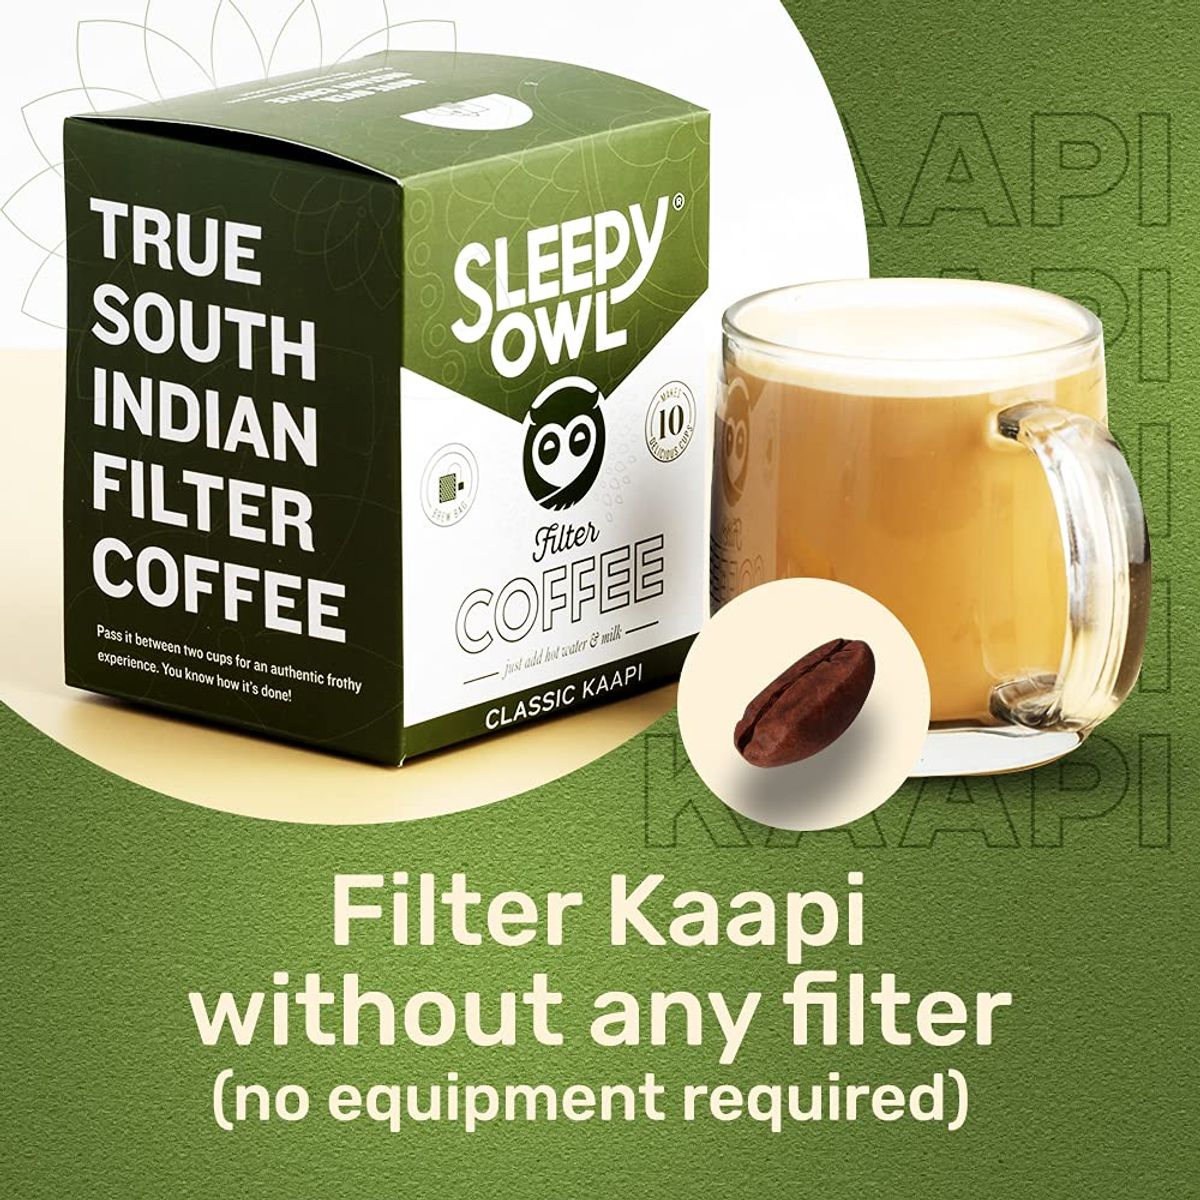 Sleepy Owl Madras Filter Coffee Brew Image